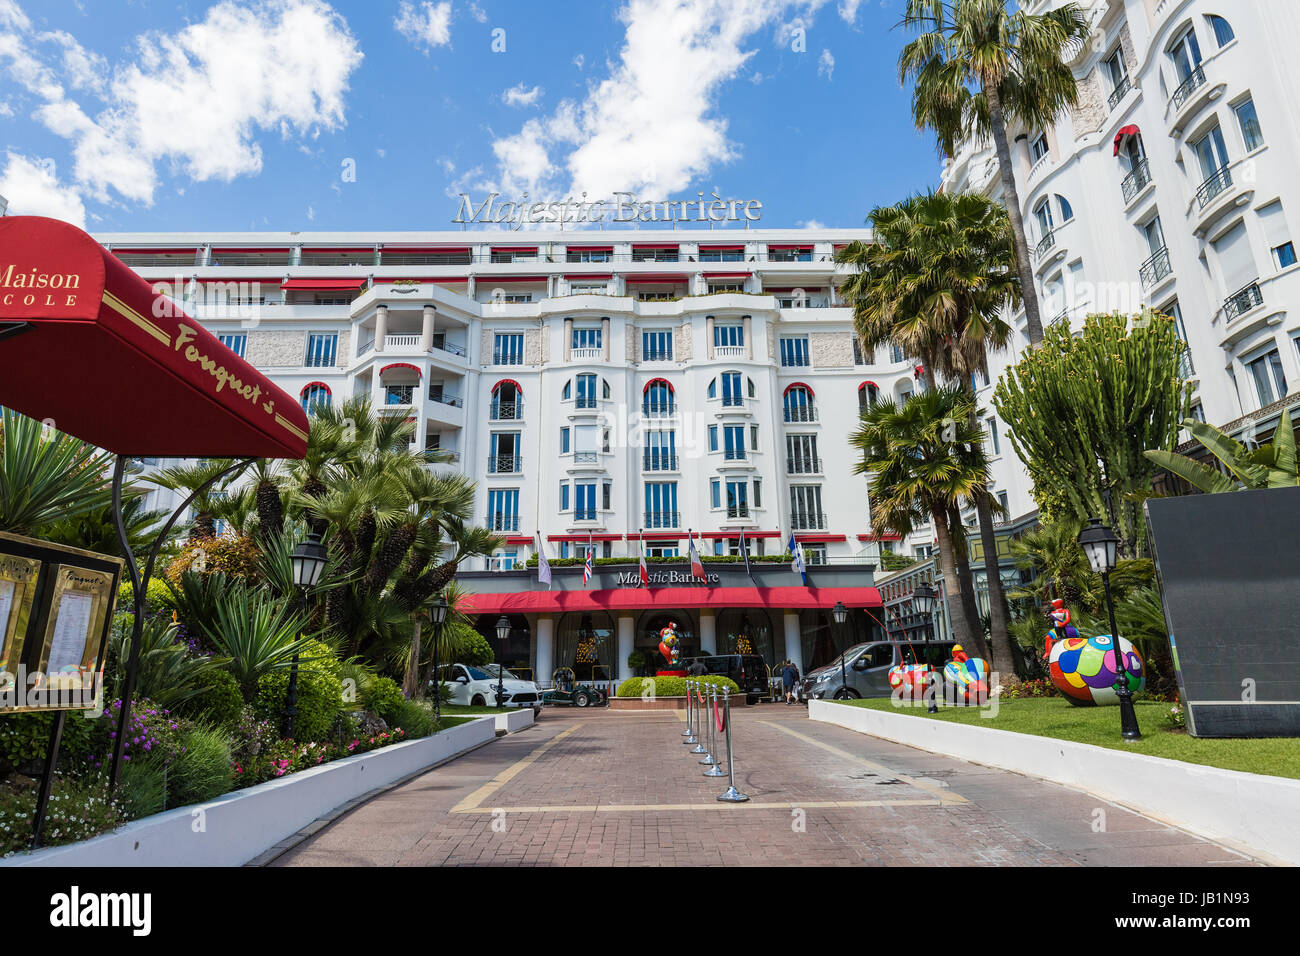 Majestic Barrière Hotel sulla Croisette a Cannes, Côte d'Azur, in Francia meridionale, Francia, Europa PublicGround Foto Stock